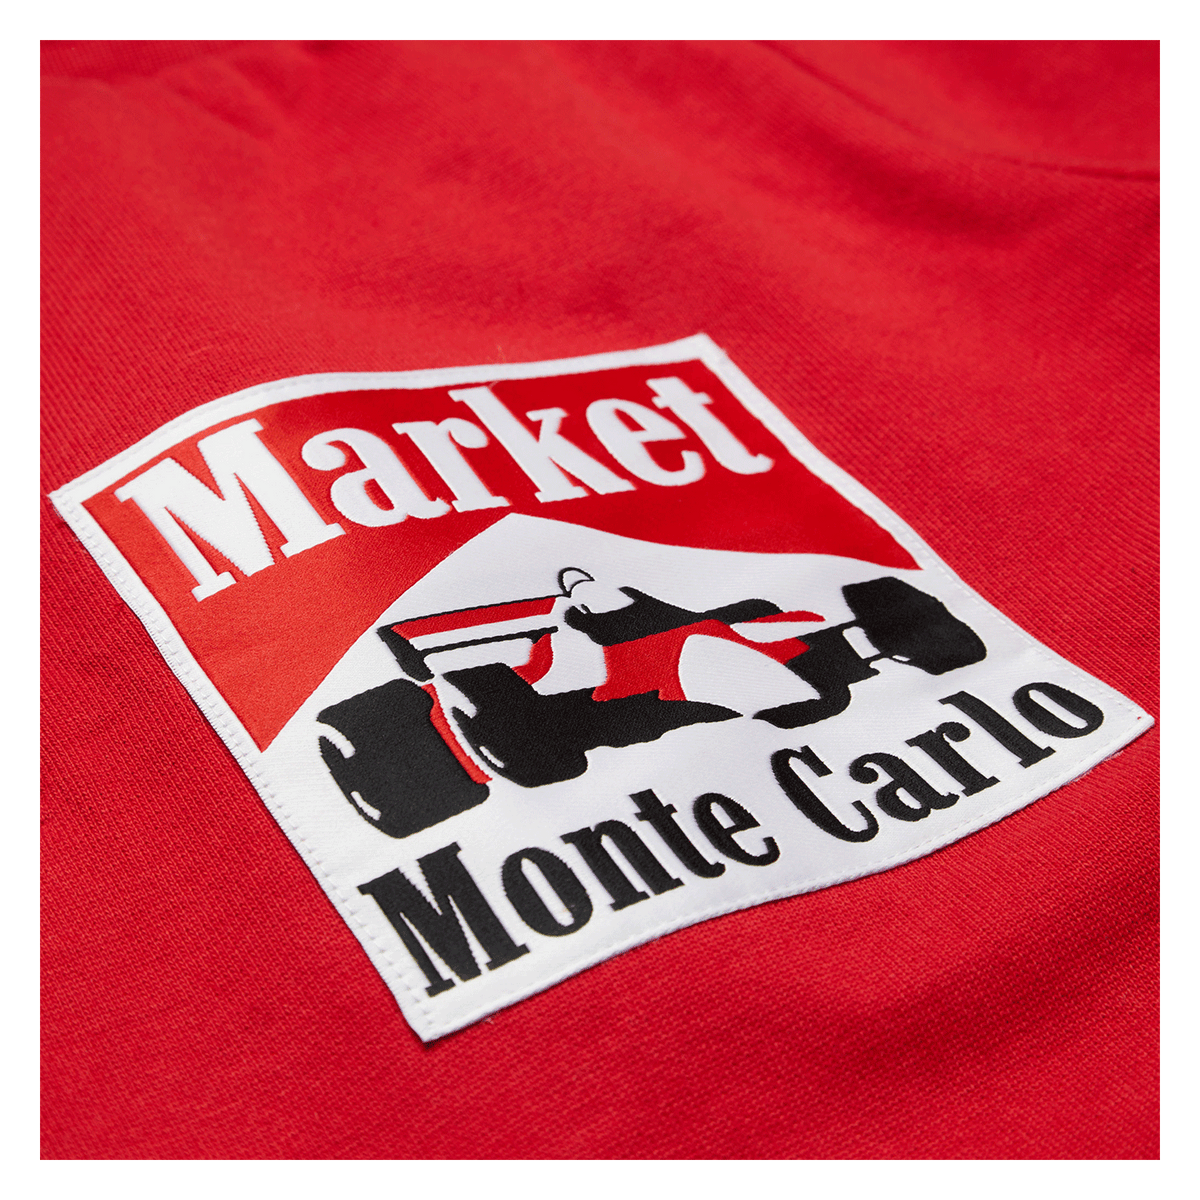 Market Racing Logo Sweatpants - Red